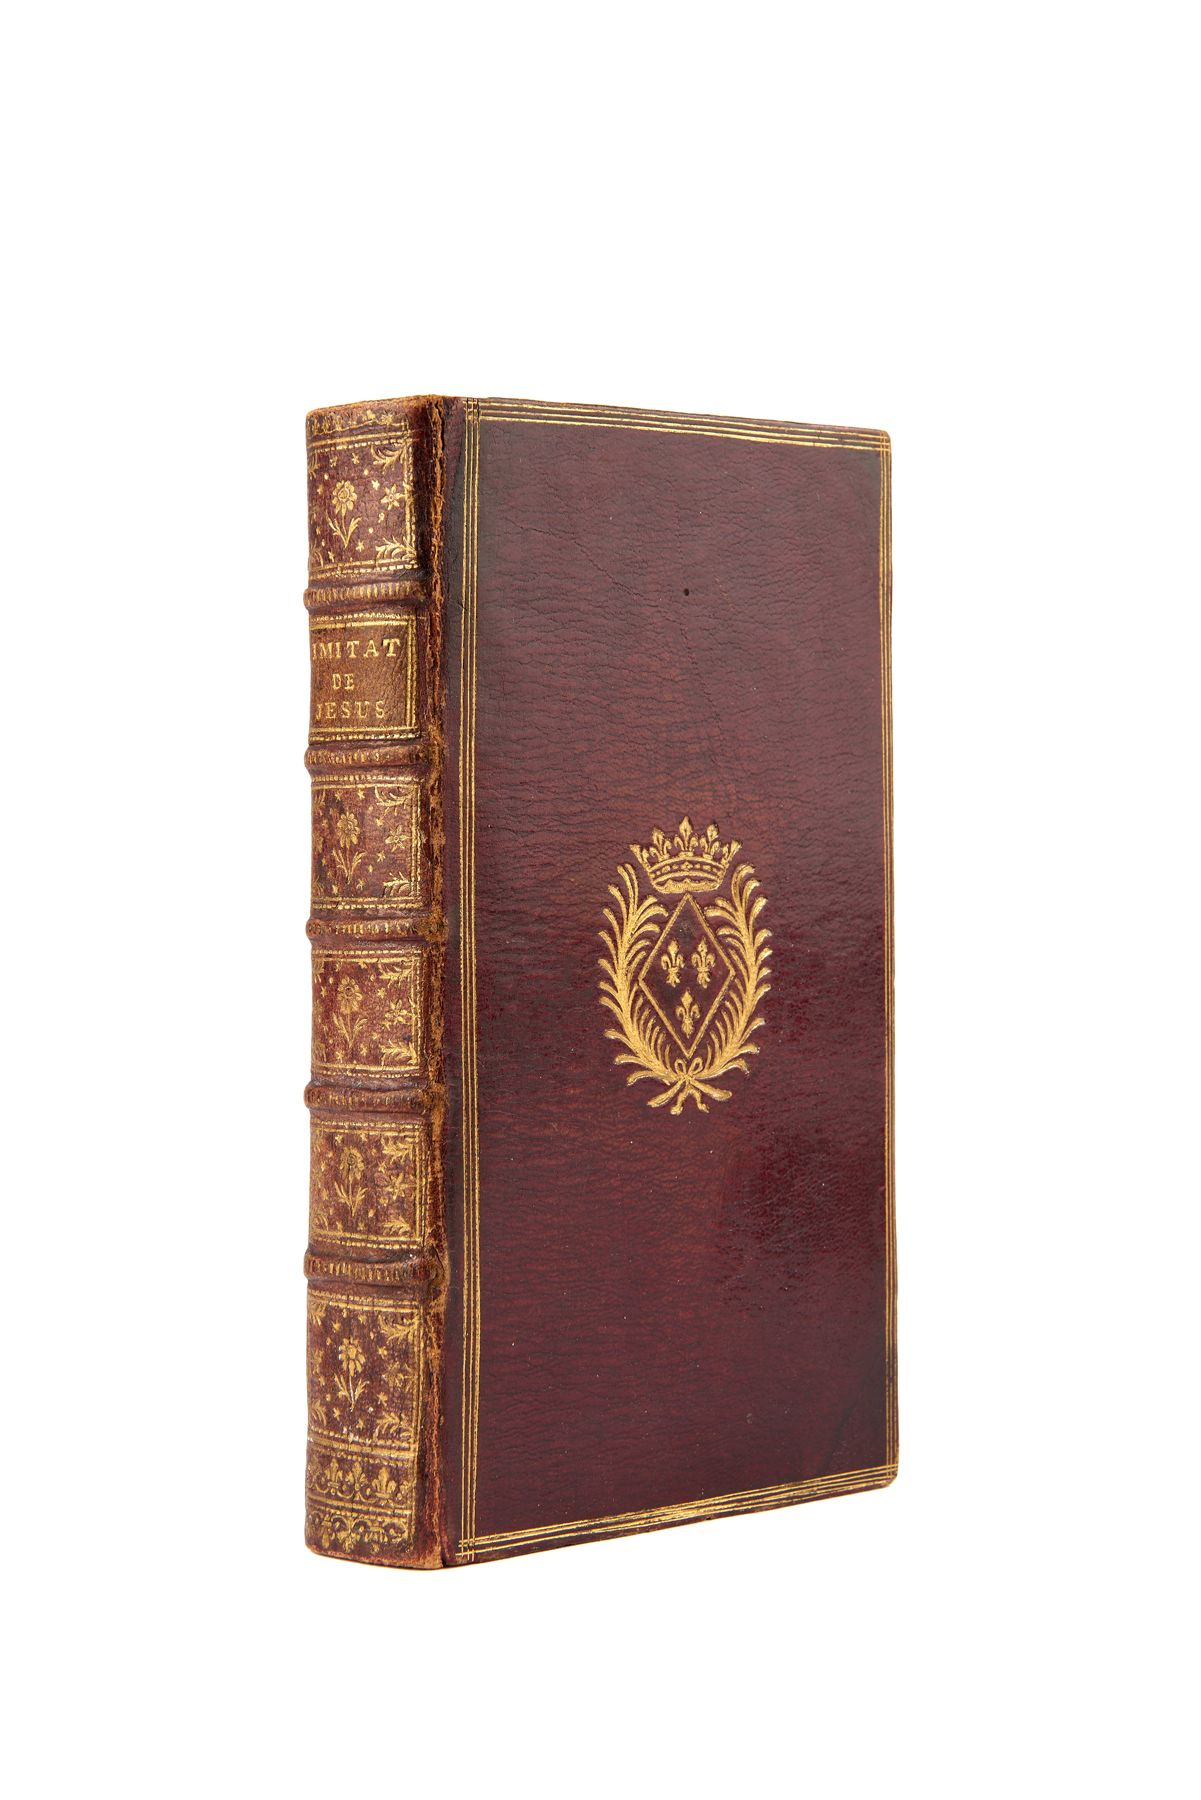 Null [BINDING] - L'imitation de Jesus-Christ.巴黎。Guerin, 1743.

一本精美的摩洛哥装订本，上面有一位&hellip;